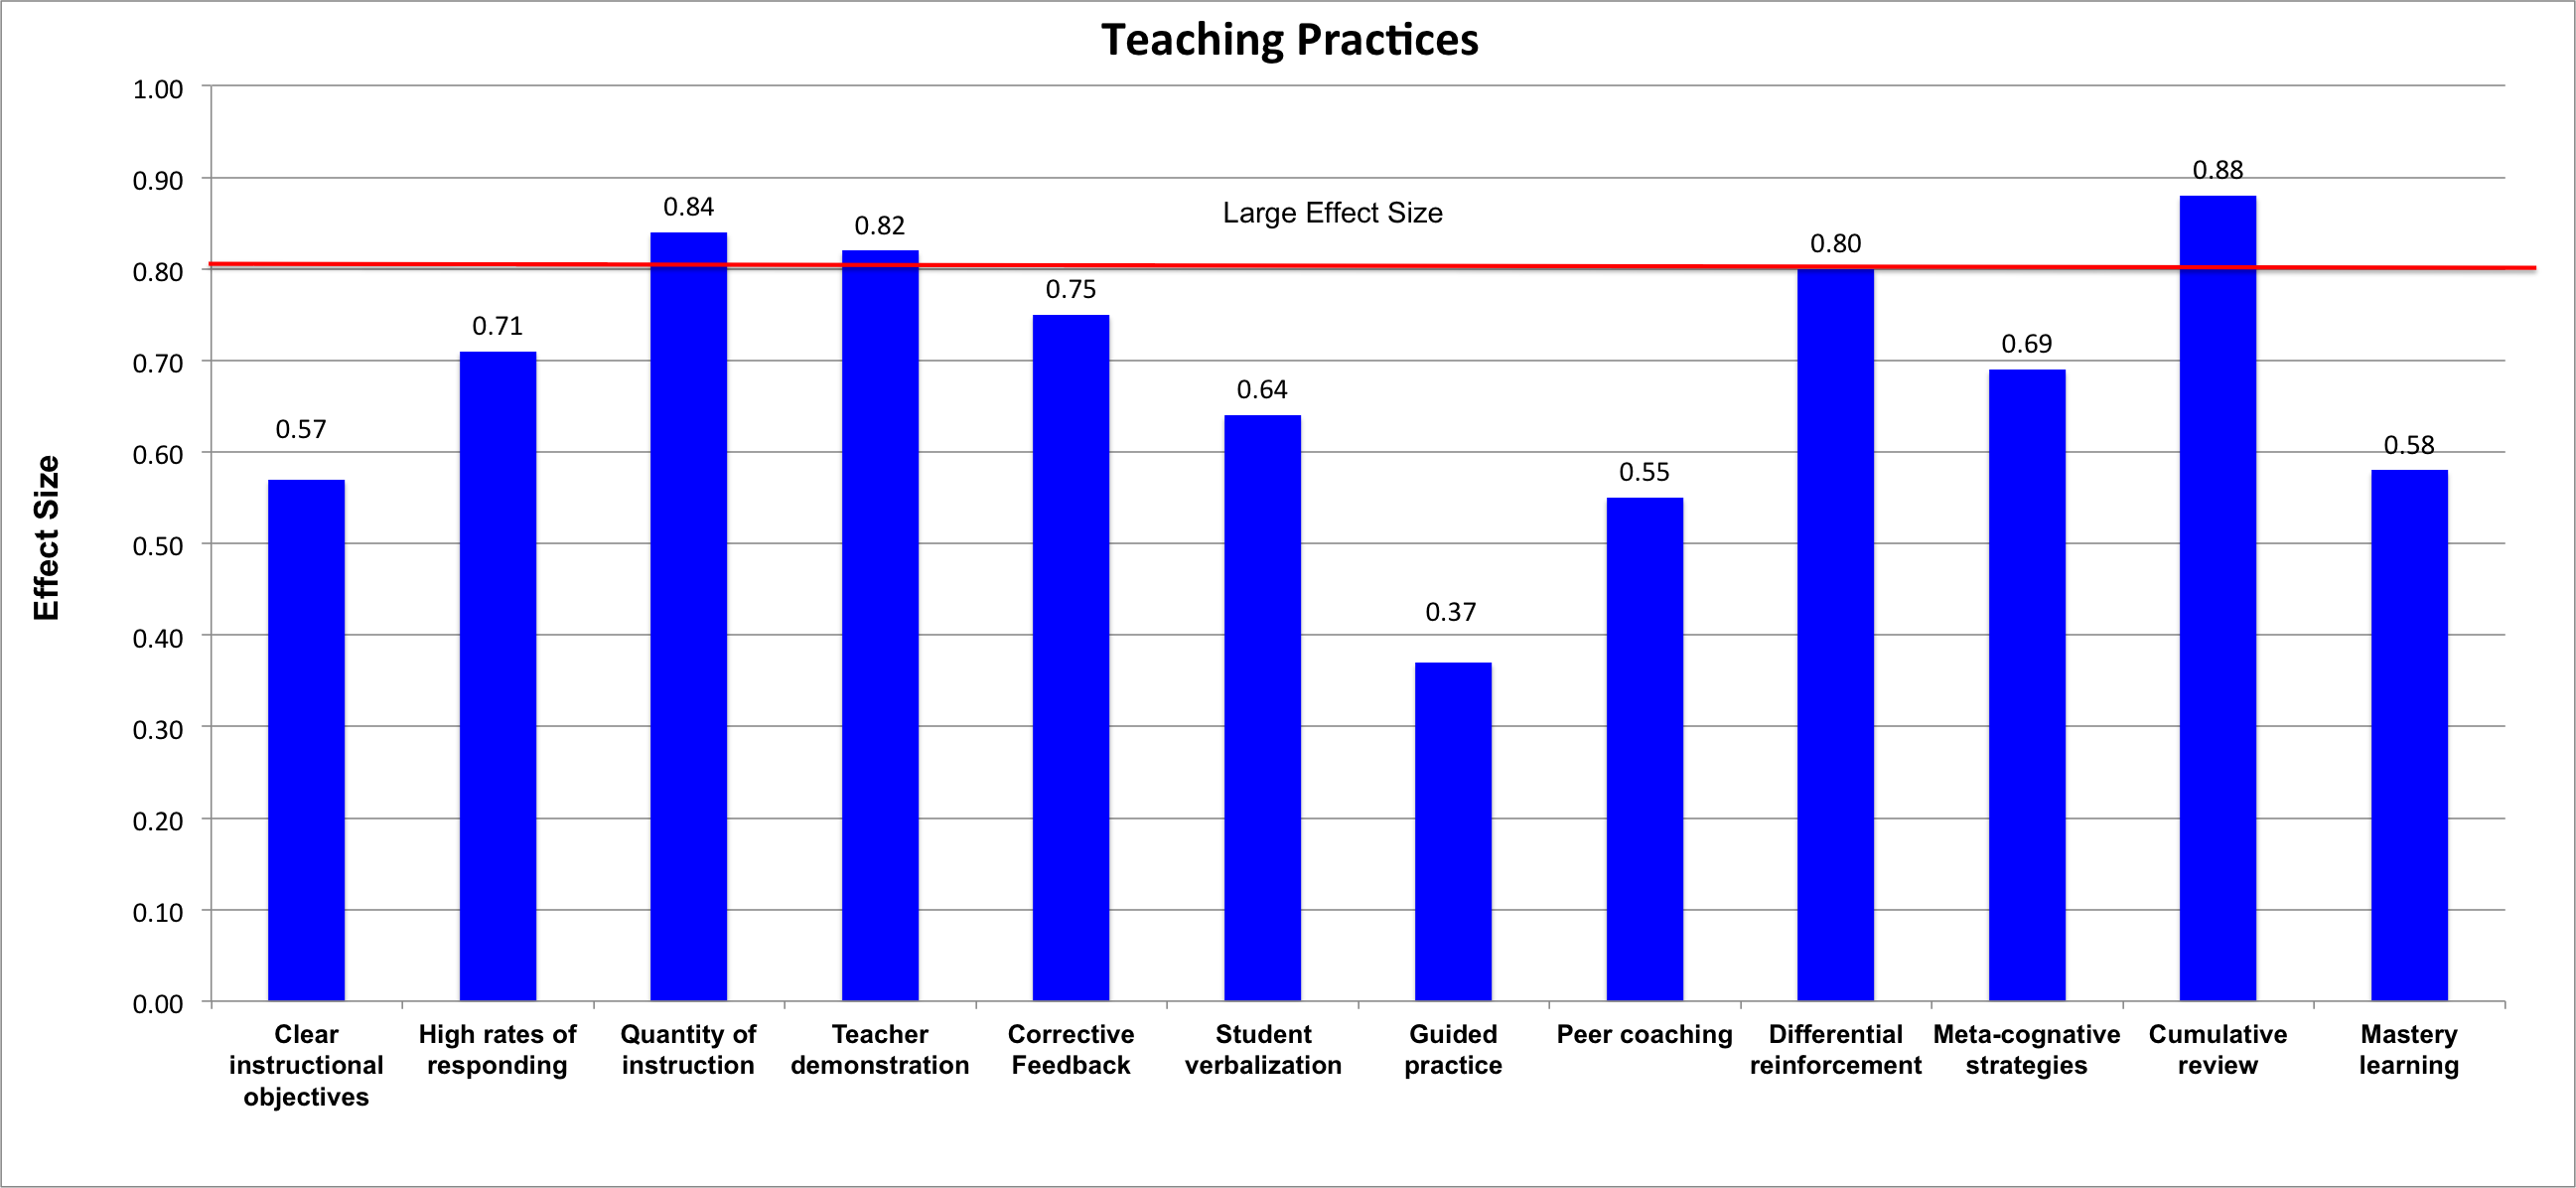 Teaching practices